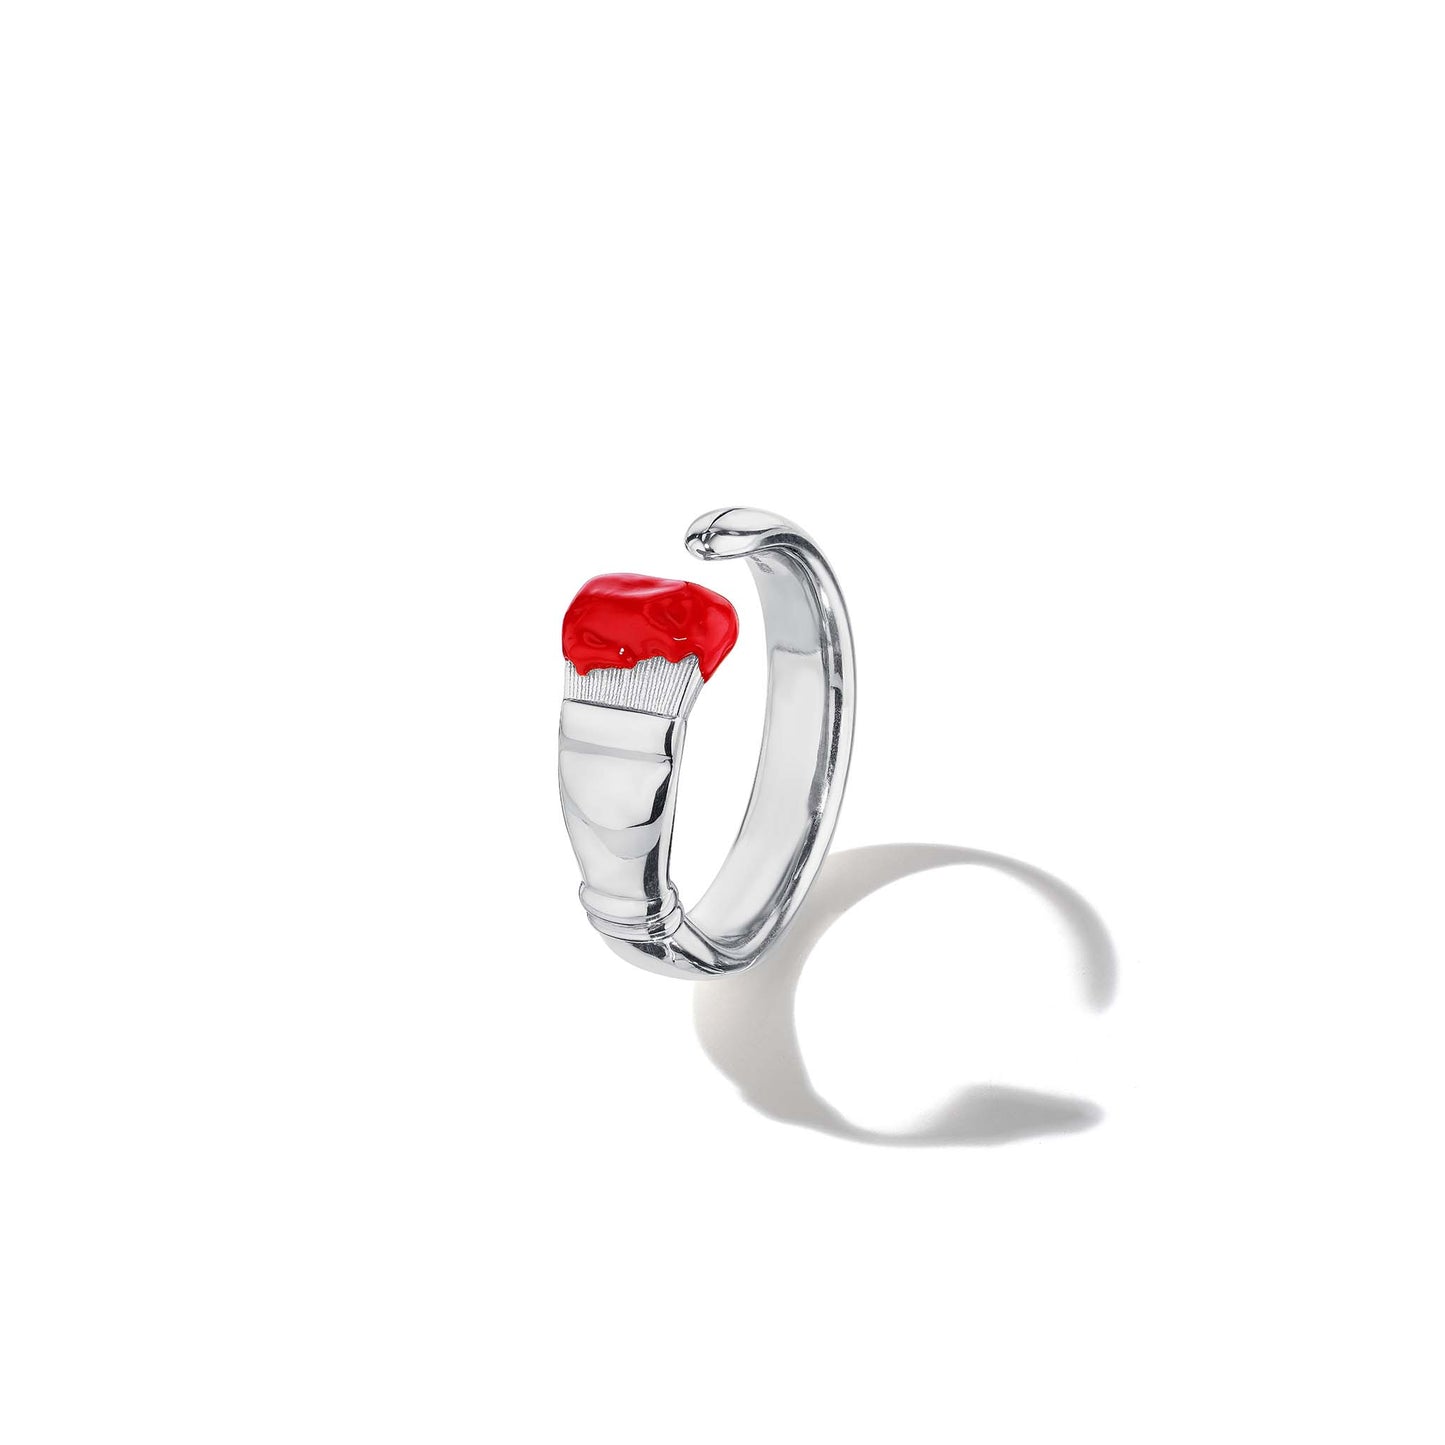 Mimi So Parsons Paintbrush Ring – Limited Edition Medium Red Enamel 18k White Gold